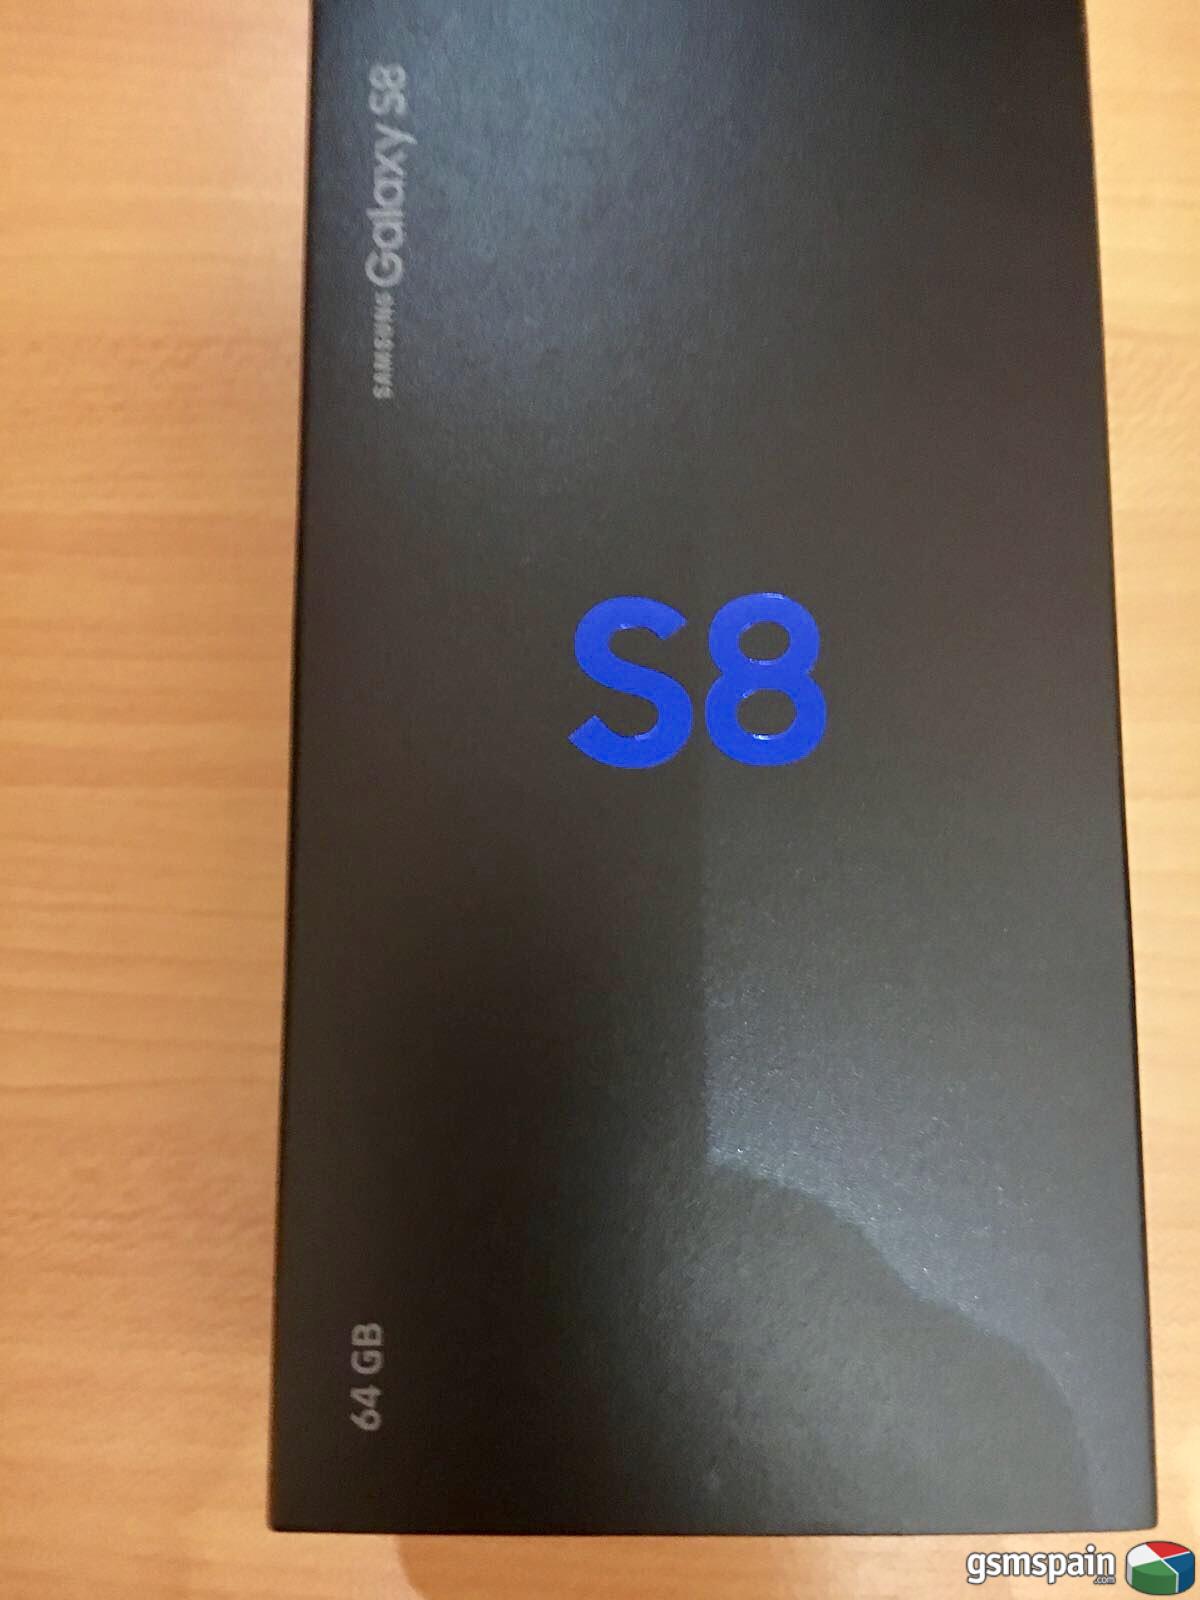 [VENDO] Samsung galaxy s8 64gb negro